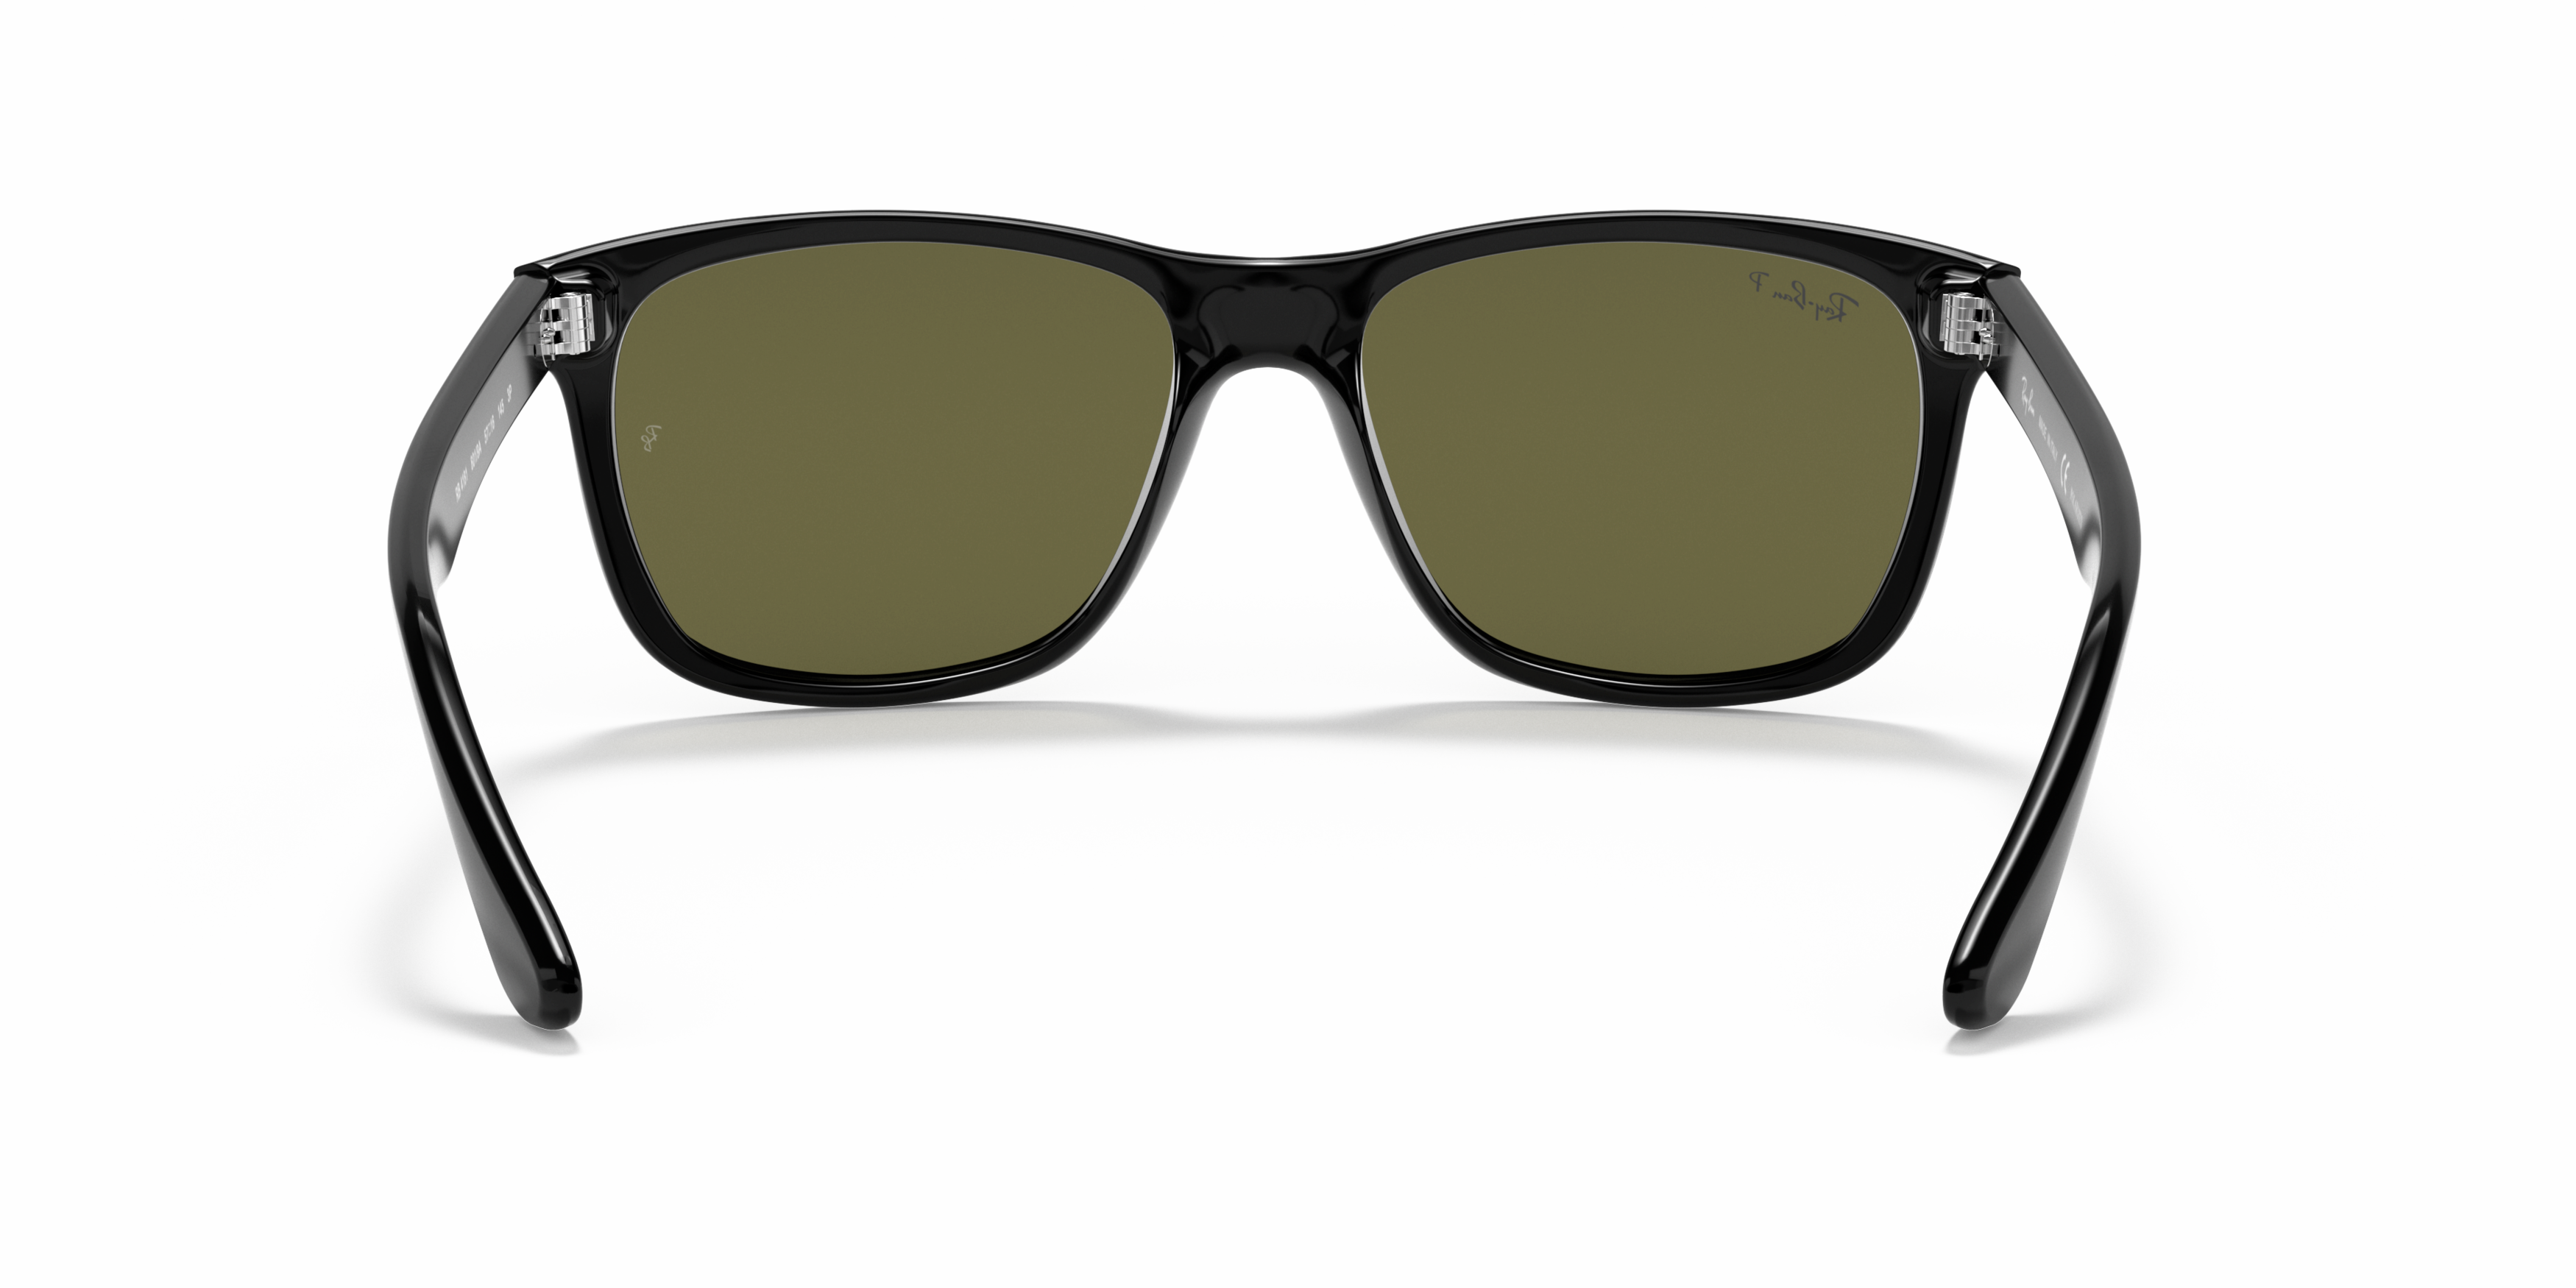 Detail02 Ray-Ban RB 4181 (601/9A) Sunglasses Green / Black